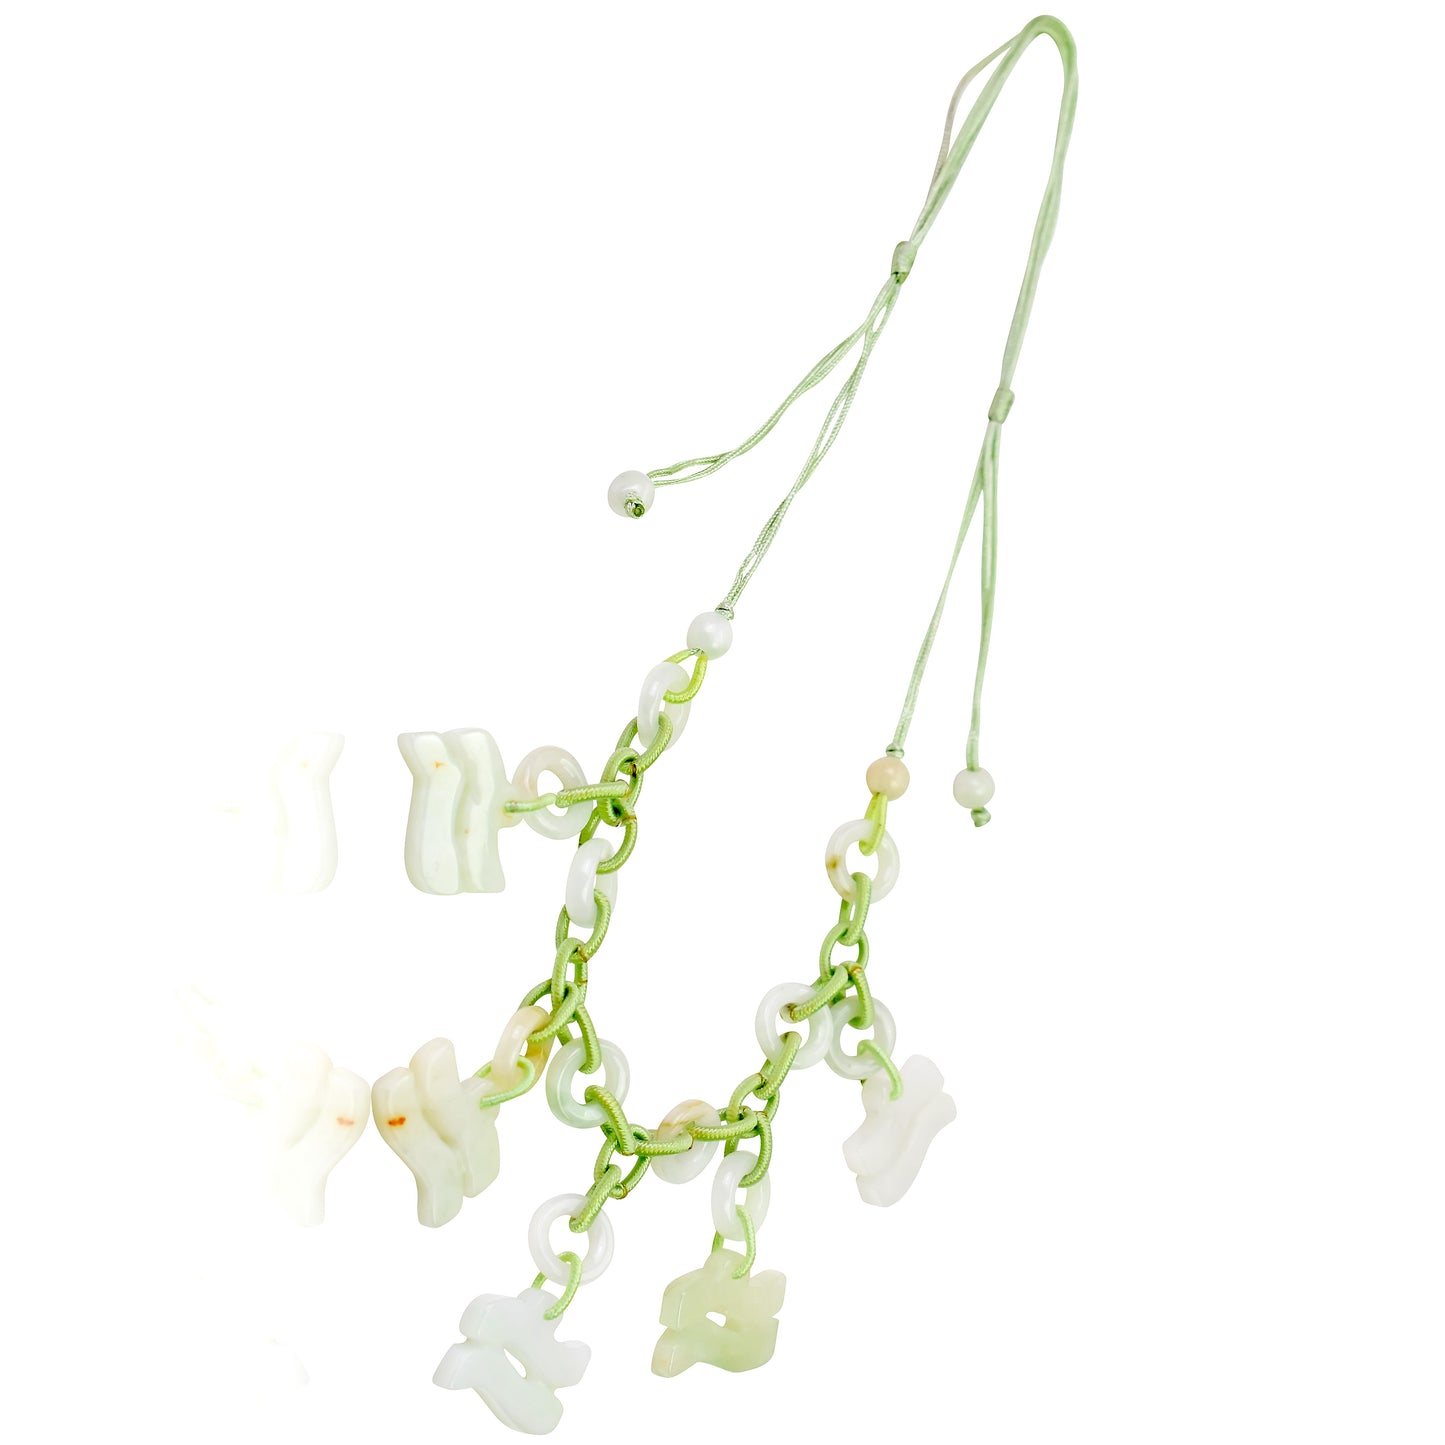 Aquarius Astrology Handmade Jade Necklace Pendant with Sea Green Cord